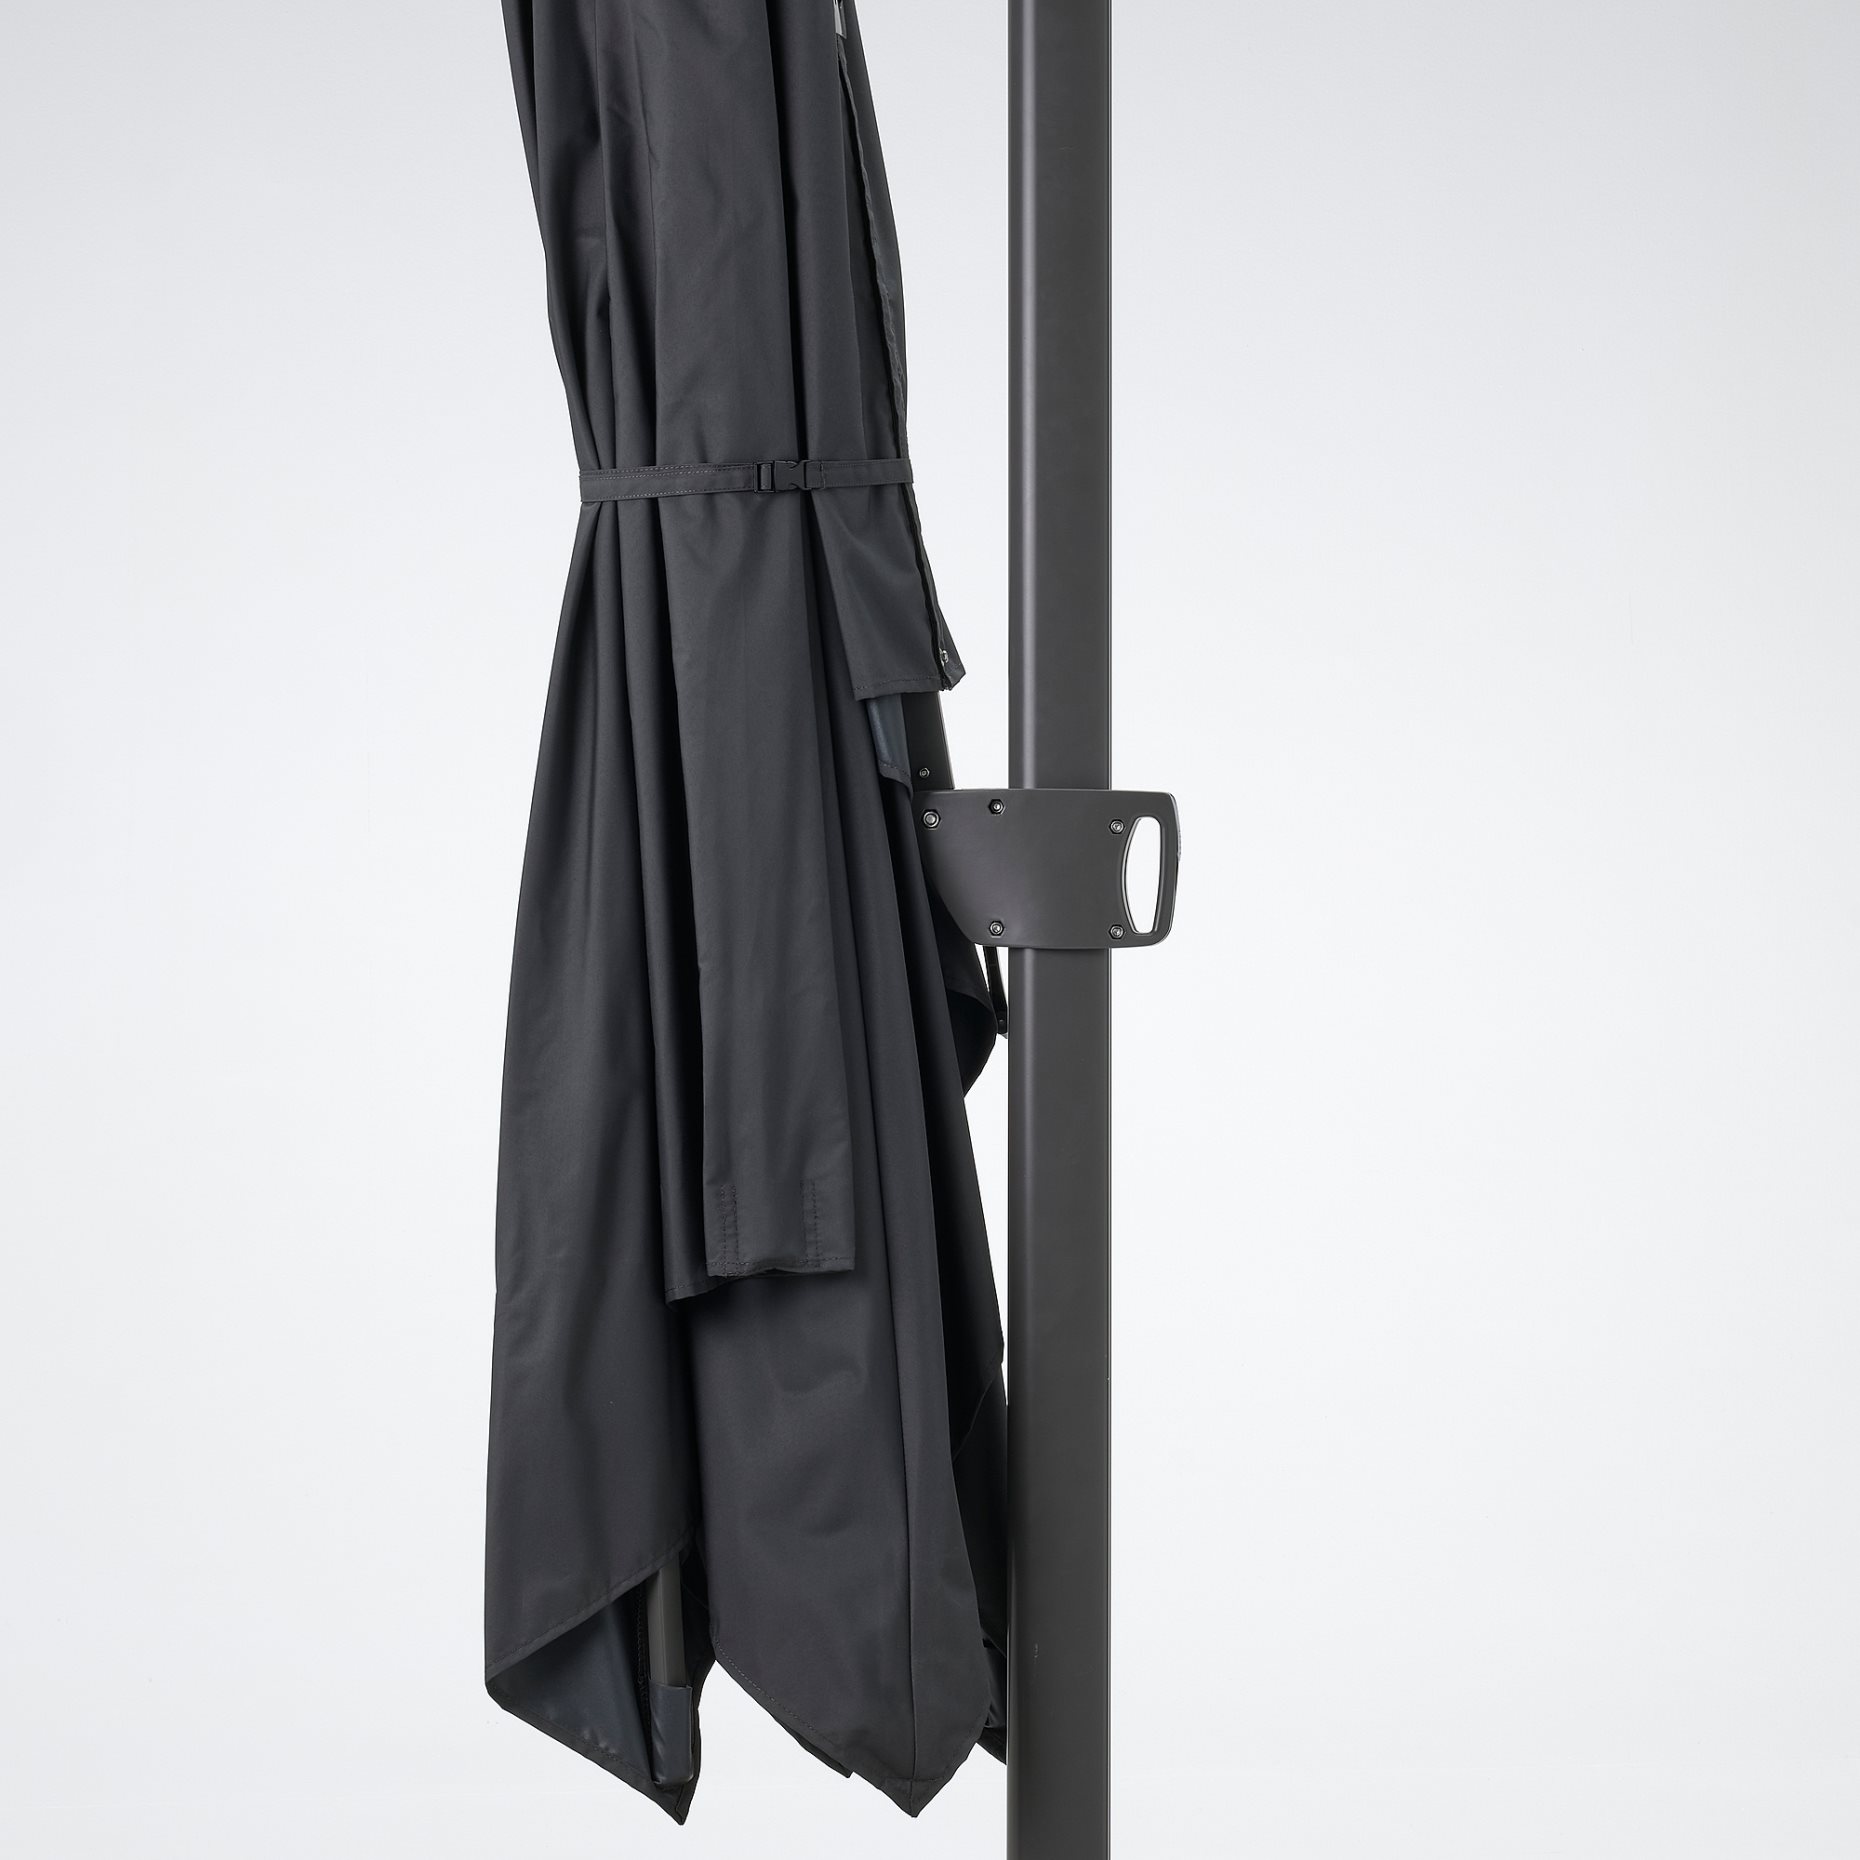 SEGLARÖ, κρεμαστή ομπρέλα με κλίση, 330x240 cm, 205.320.07